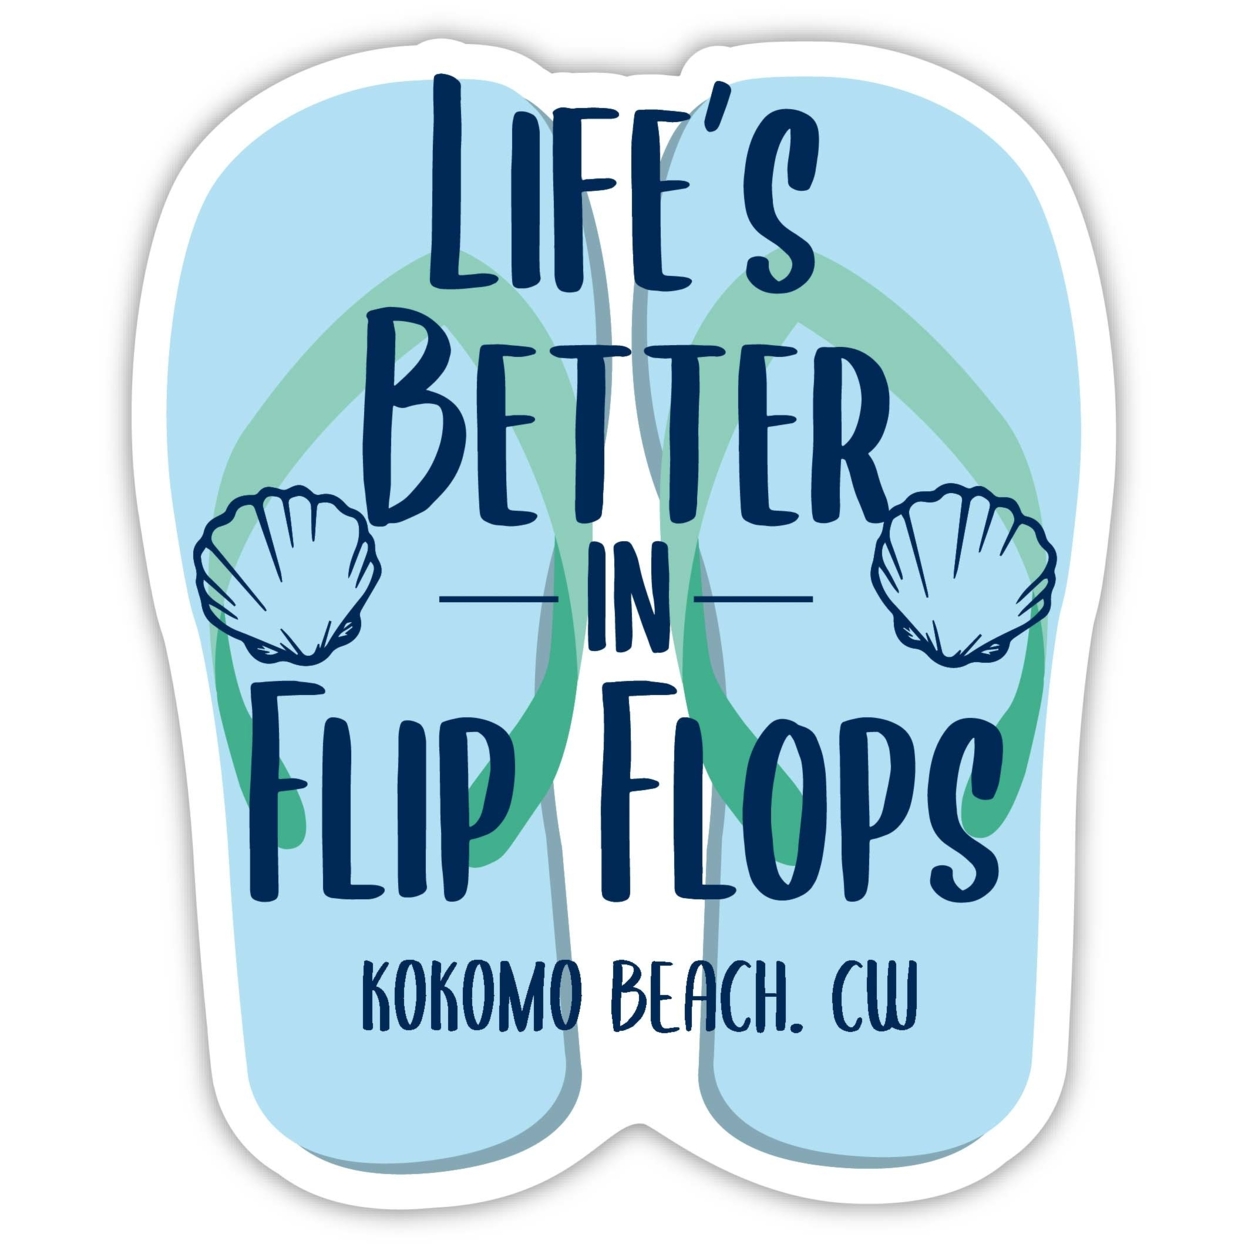 Kokomo Beach CuraÃ§ao Souvenir 4 Inch Vinyl Decal Sticker Flip Flop Design